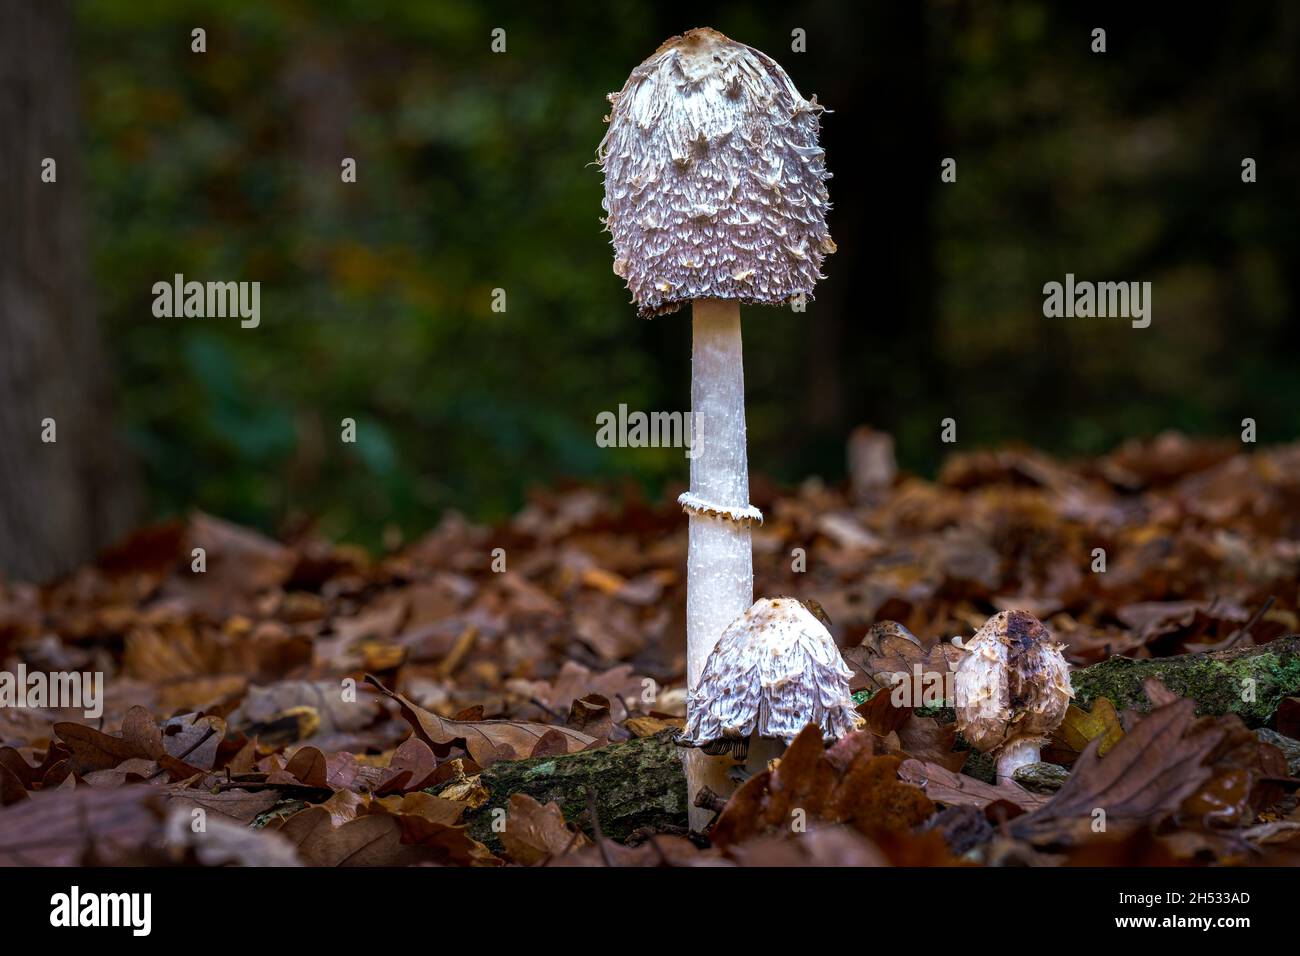 Scaly ink mushroom, Coprinus comatus,or the shaggy ink cap mushroom Stock Photo